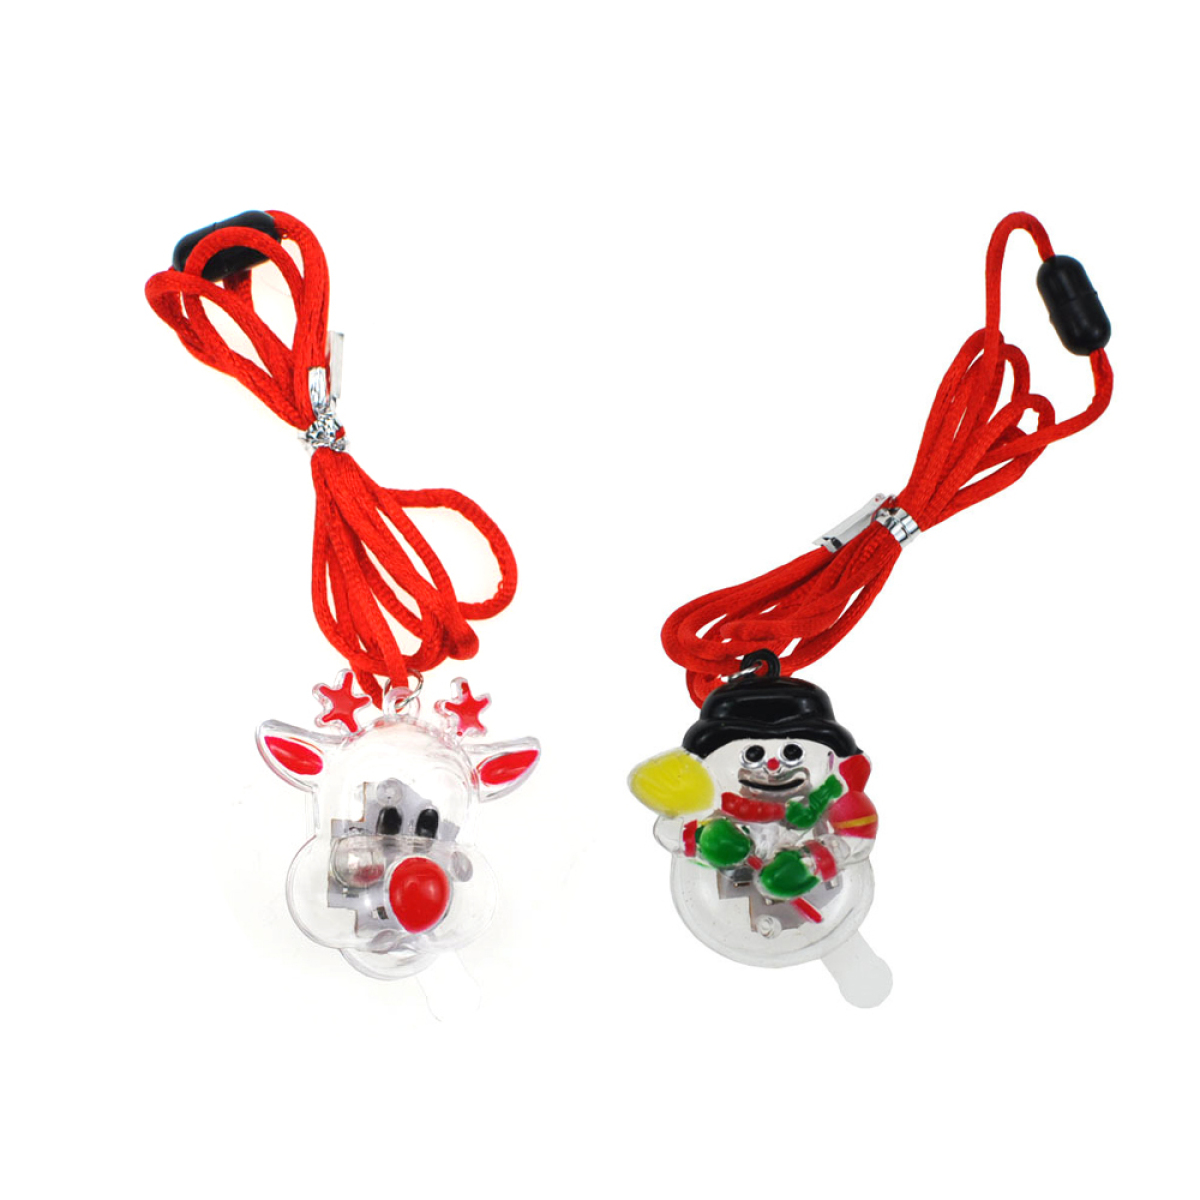 COZEVDNT Light-Up Christmas Bulb for Xmas Mehrfarbig Accessories - Festive Weihnachtsdeko, Parties Necklaces